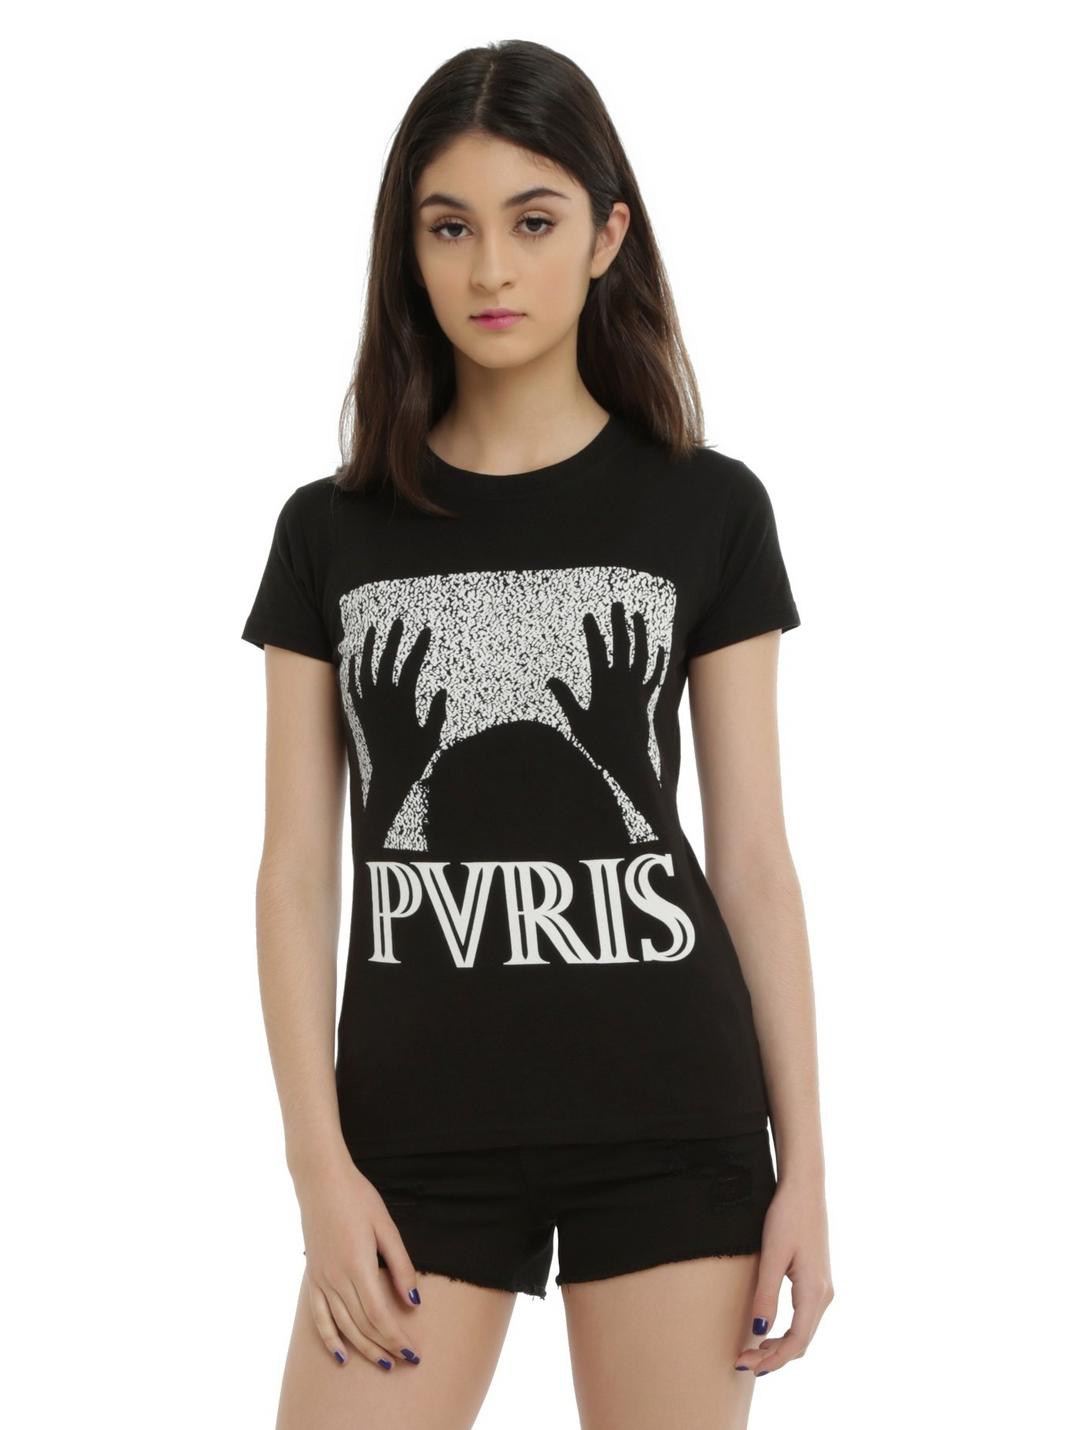 PVRIS Whitenoise Static Hands Girls T-Shirt, BLACK, hi-res